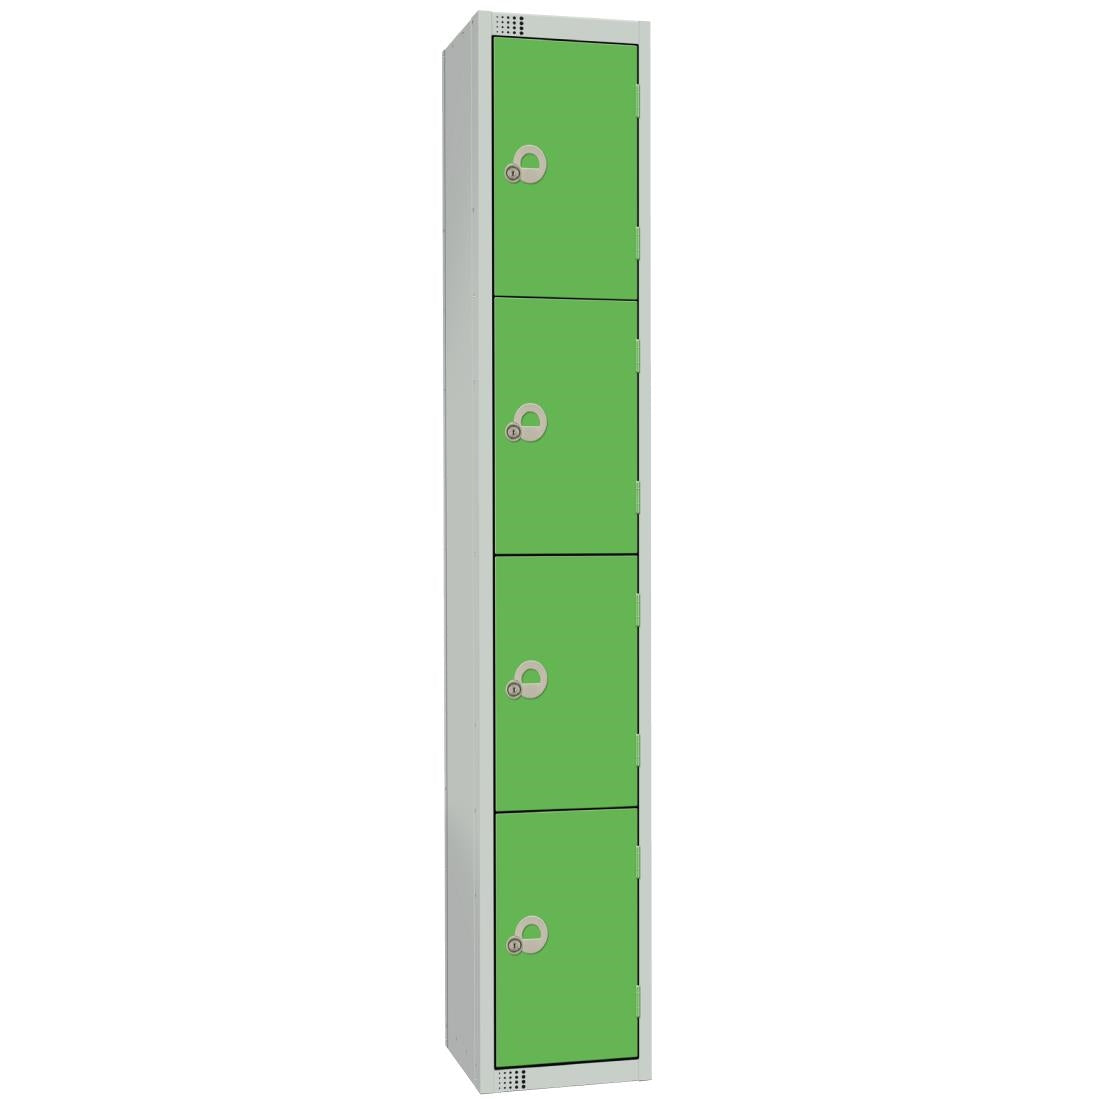 W987-CL Elite Four Door Manual Combination Locker Locker Green